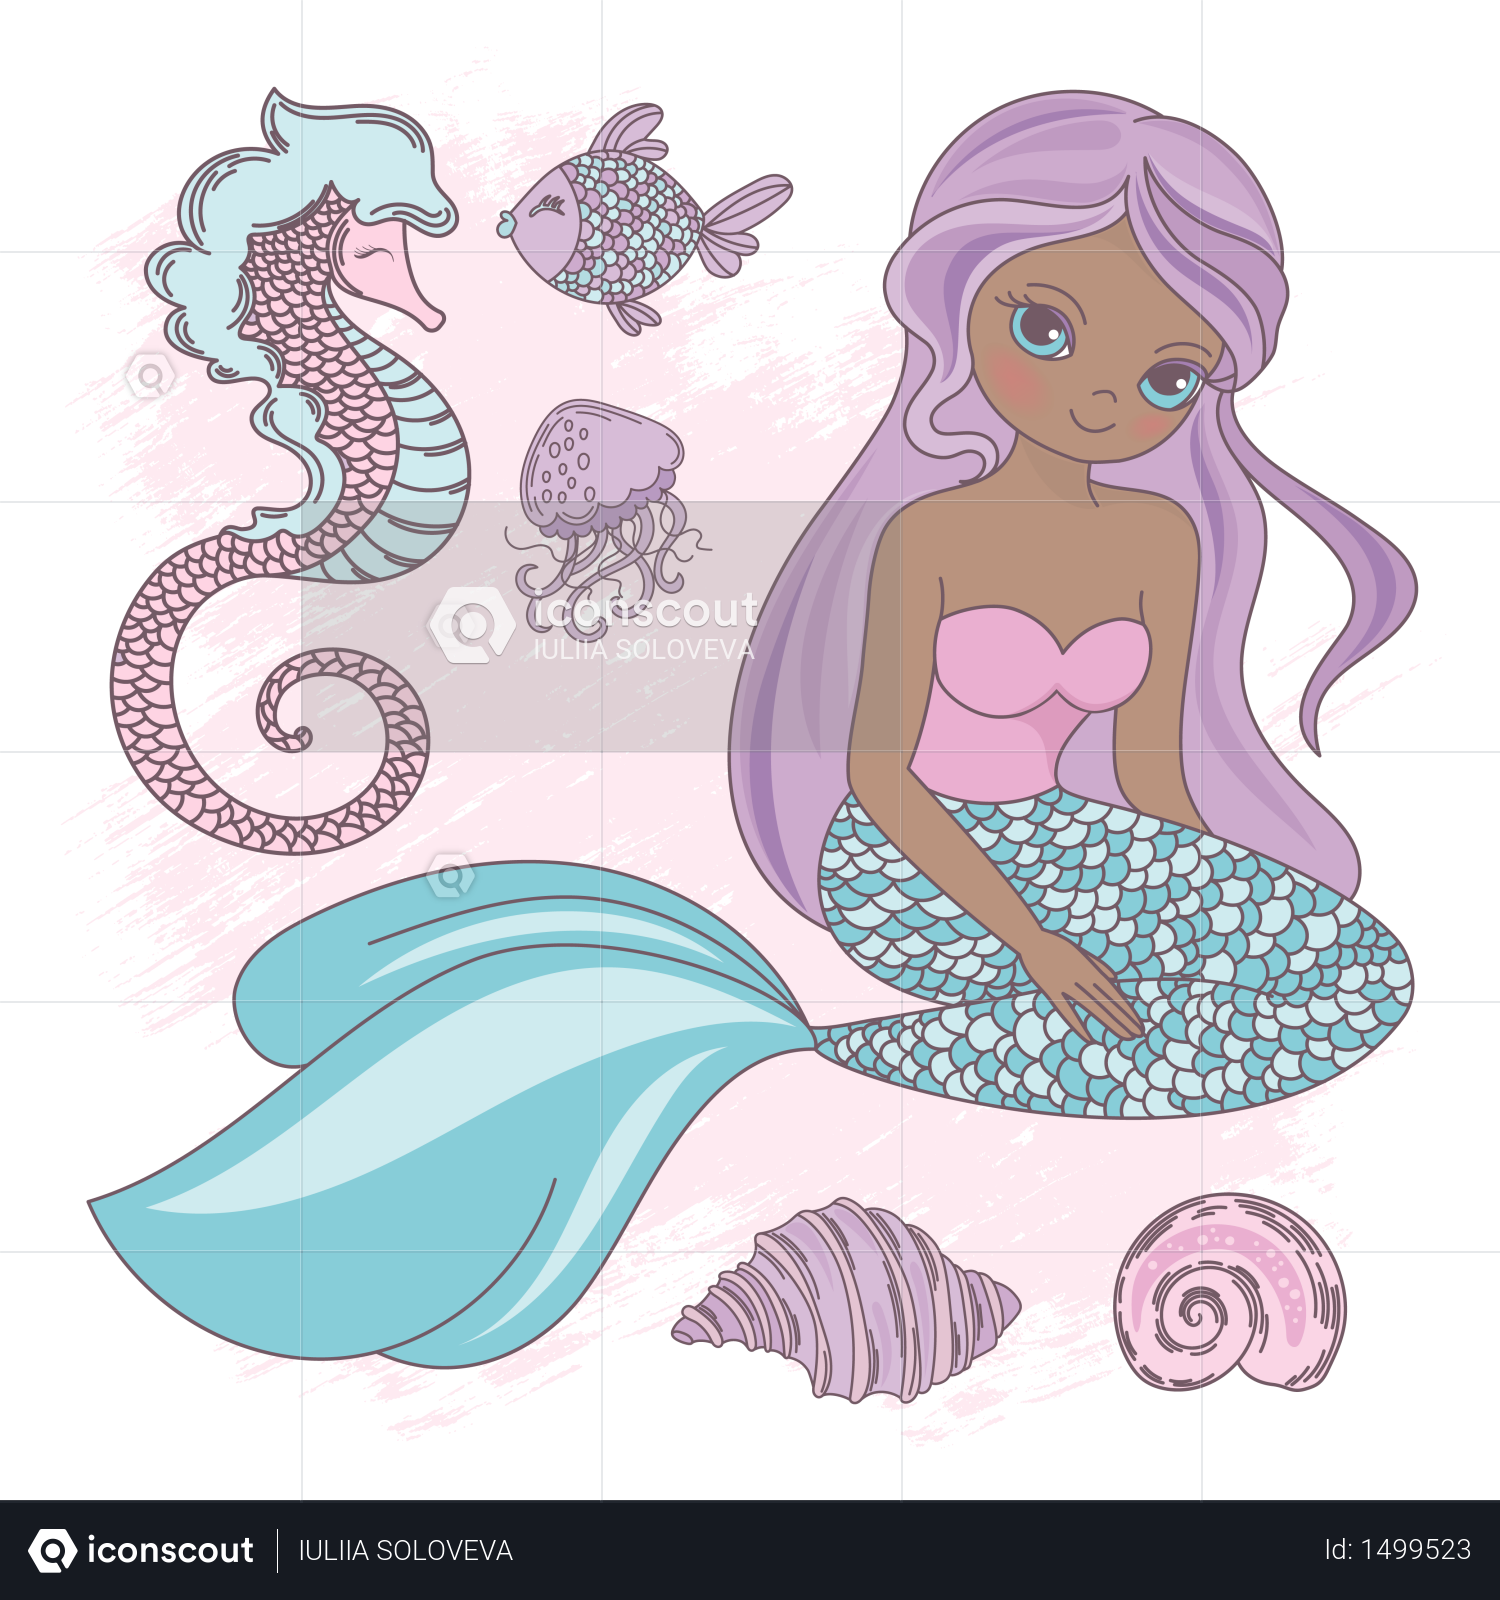 Premium Sitting Mermaid Princess Sea Animal Illustration Download In